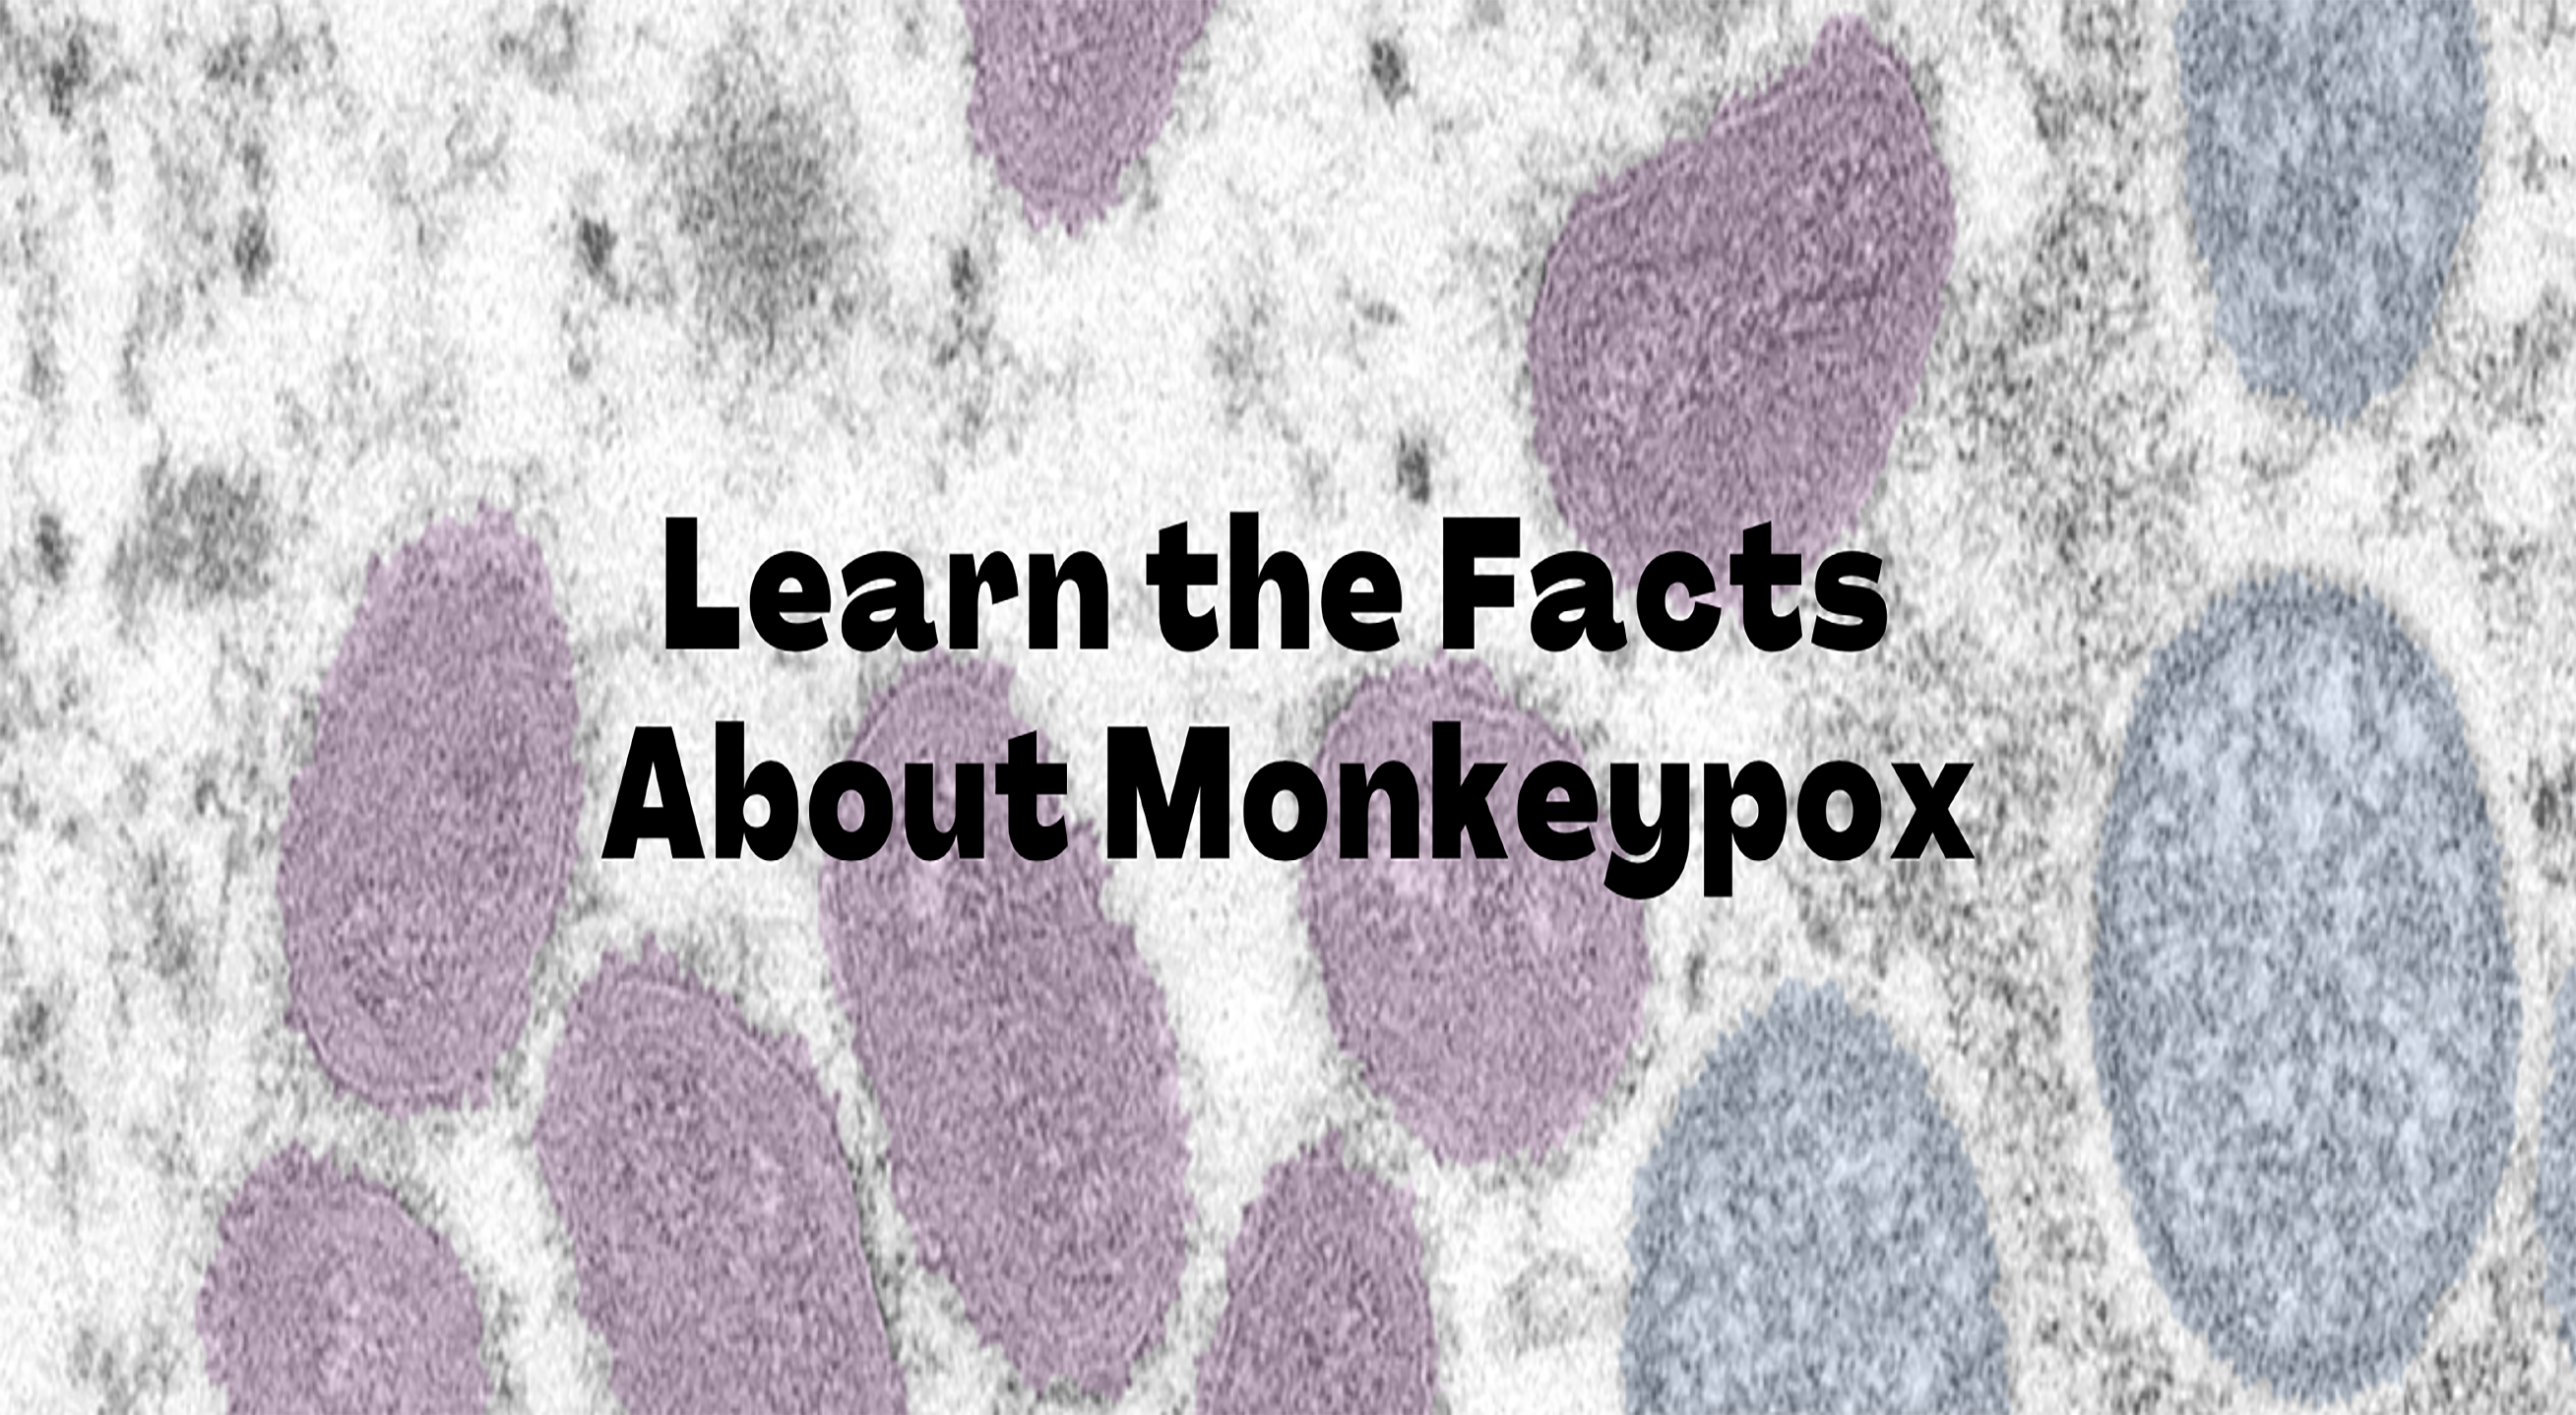 Monkeypox Image